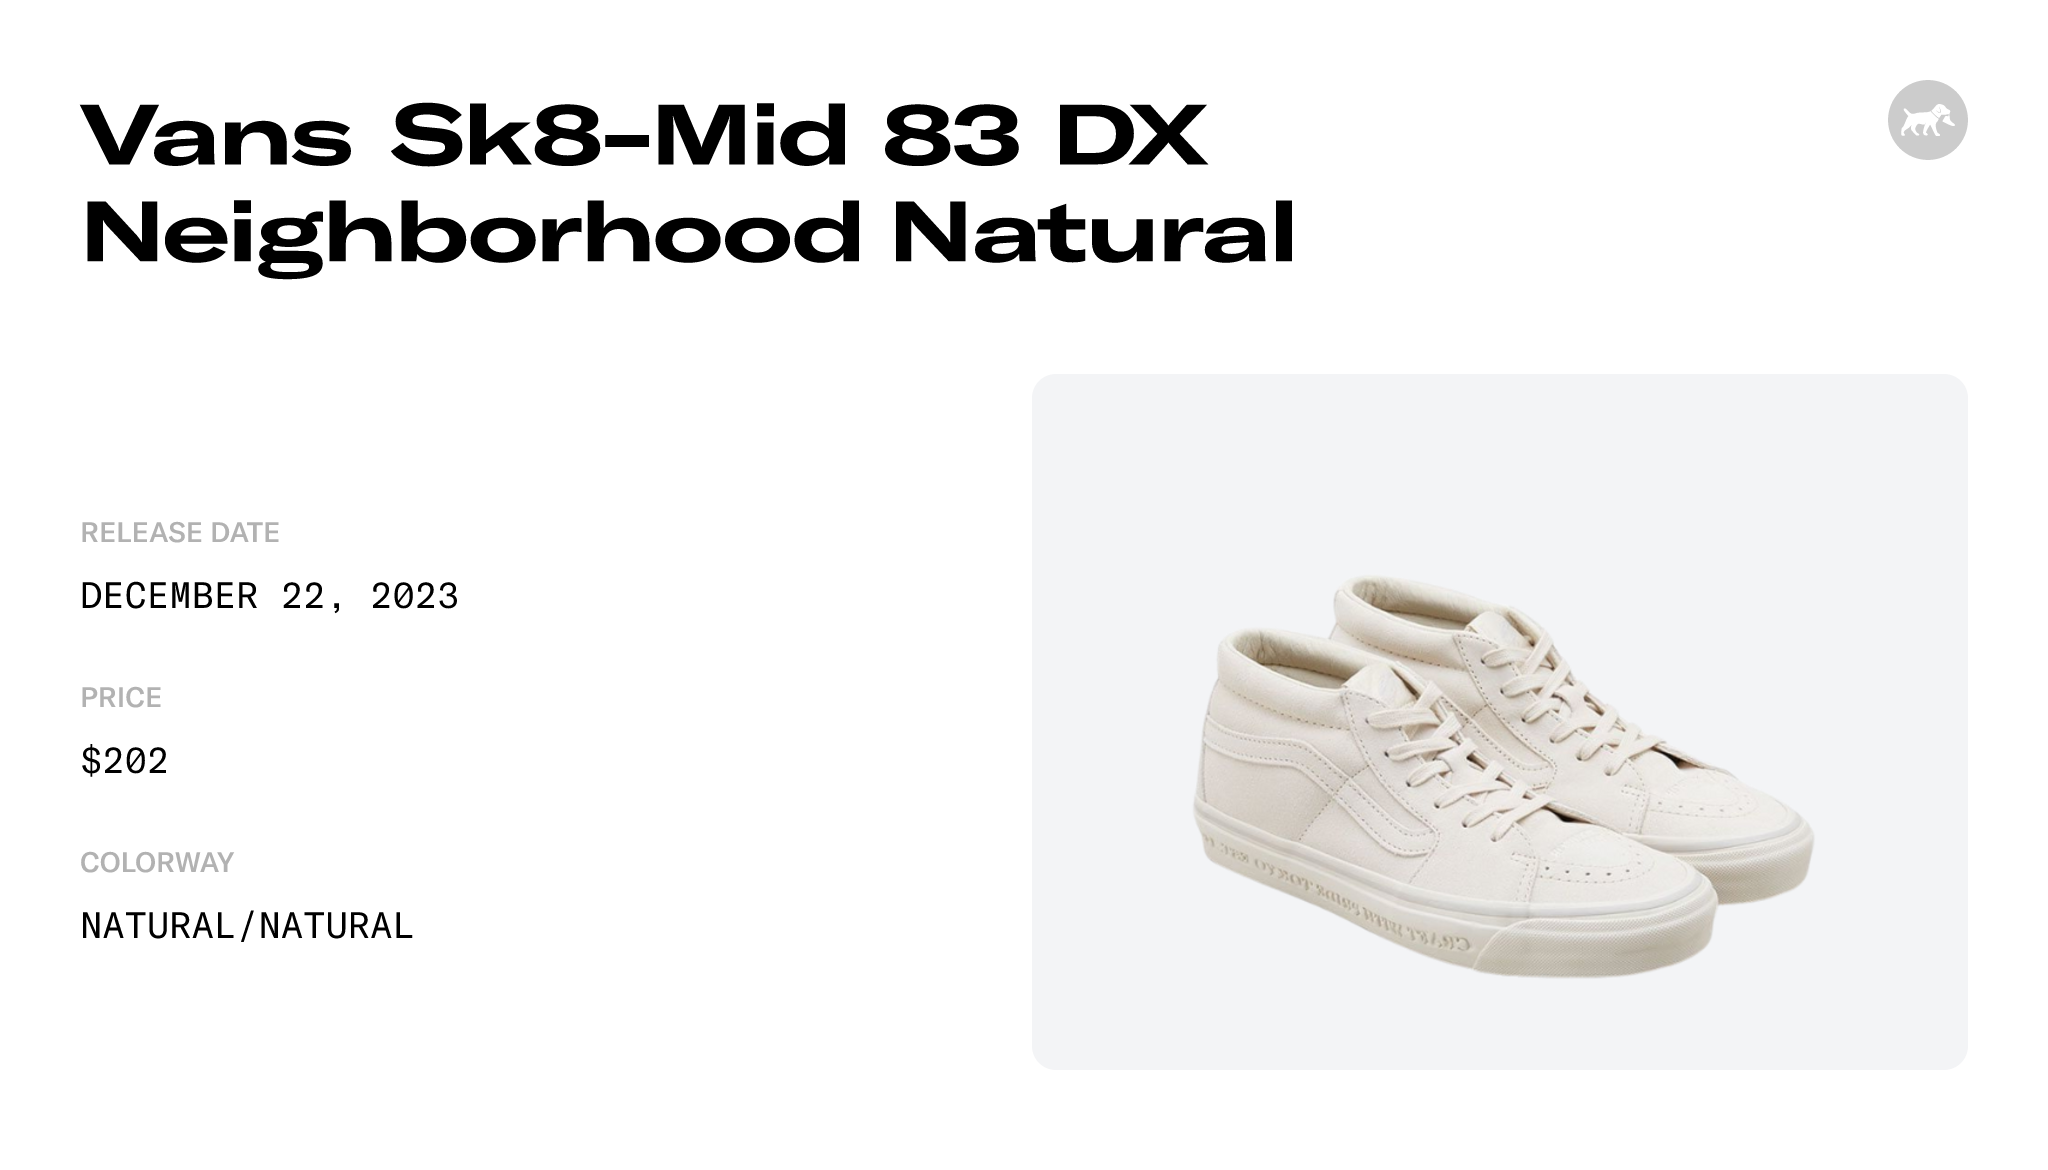 Vans Sk8-Mid 83 DX Neighborhood Natural Raffles and Release Date